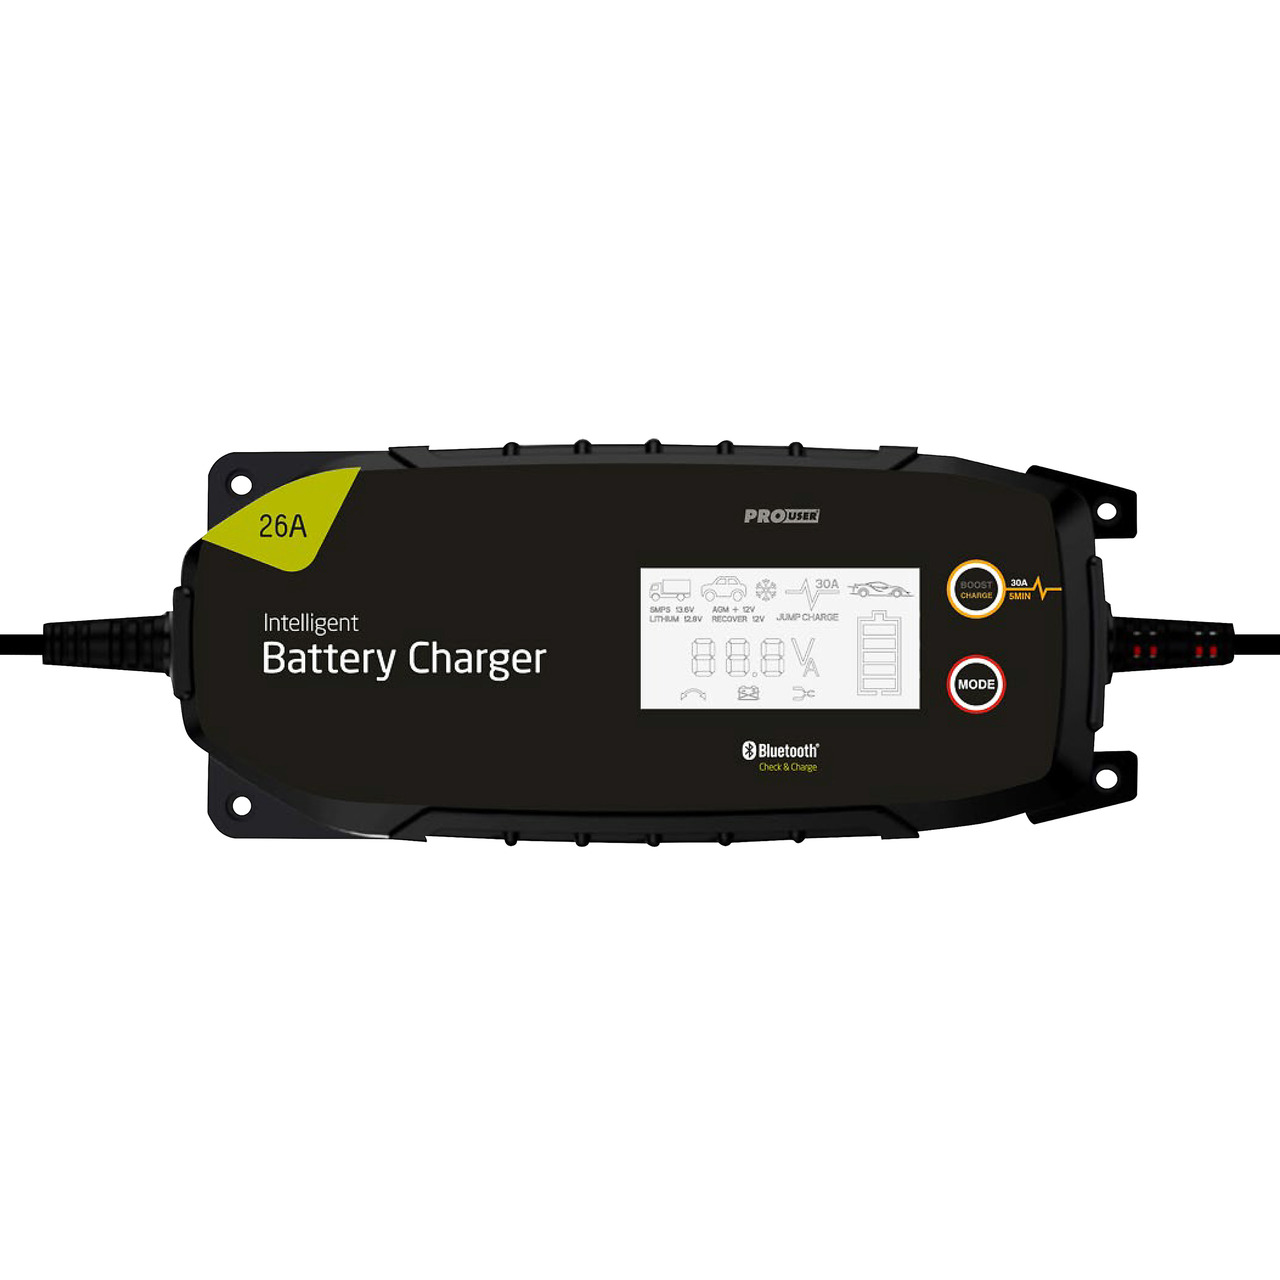 ProUser Kfz-Batterieladegert IBC26000B- 12-24 V- max- 26 A- Bluetooth-Funktion- IP65 unter KFZ